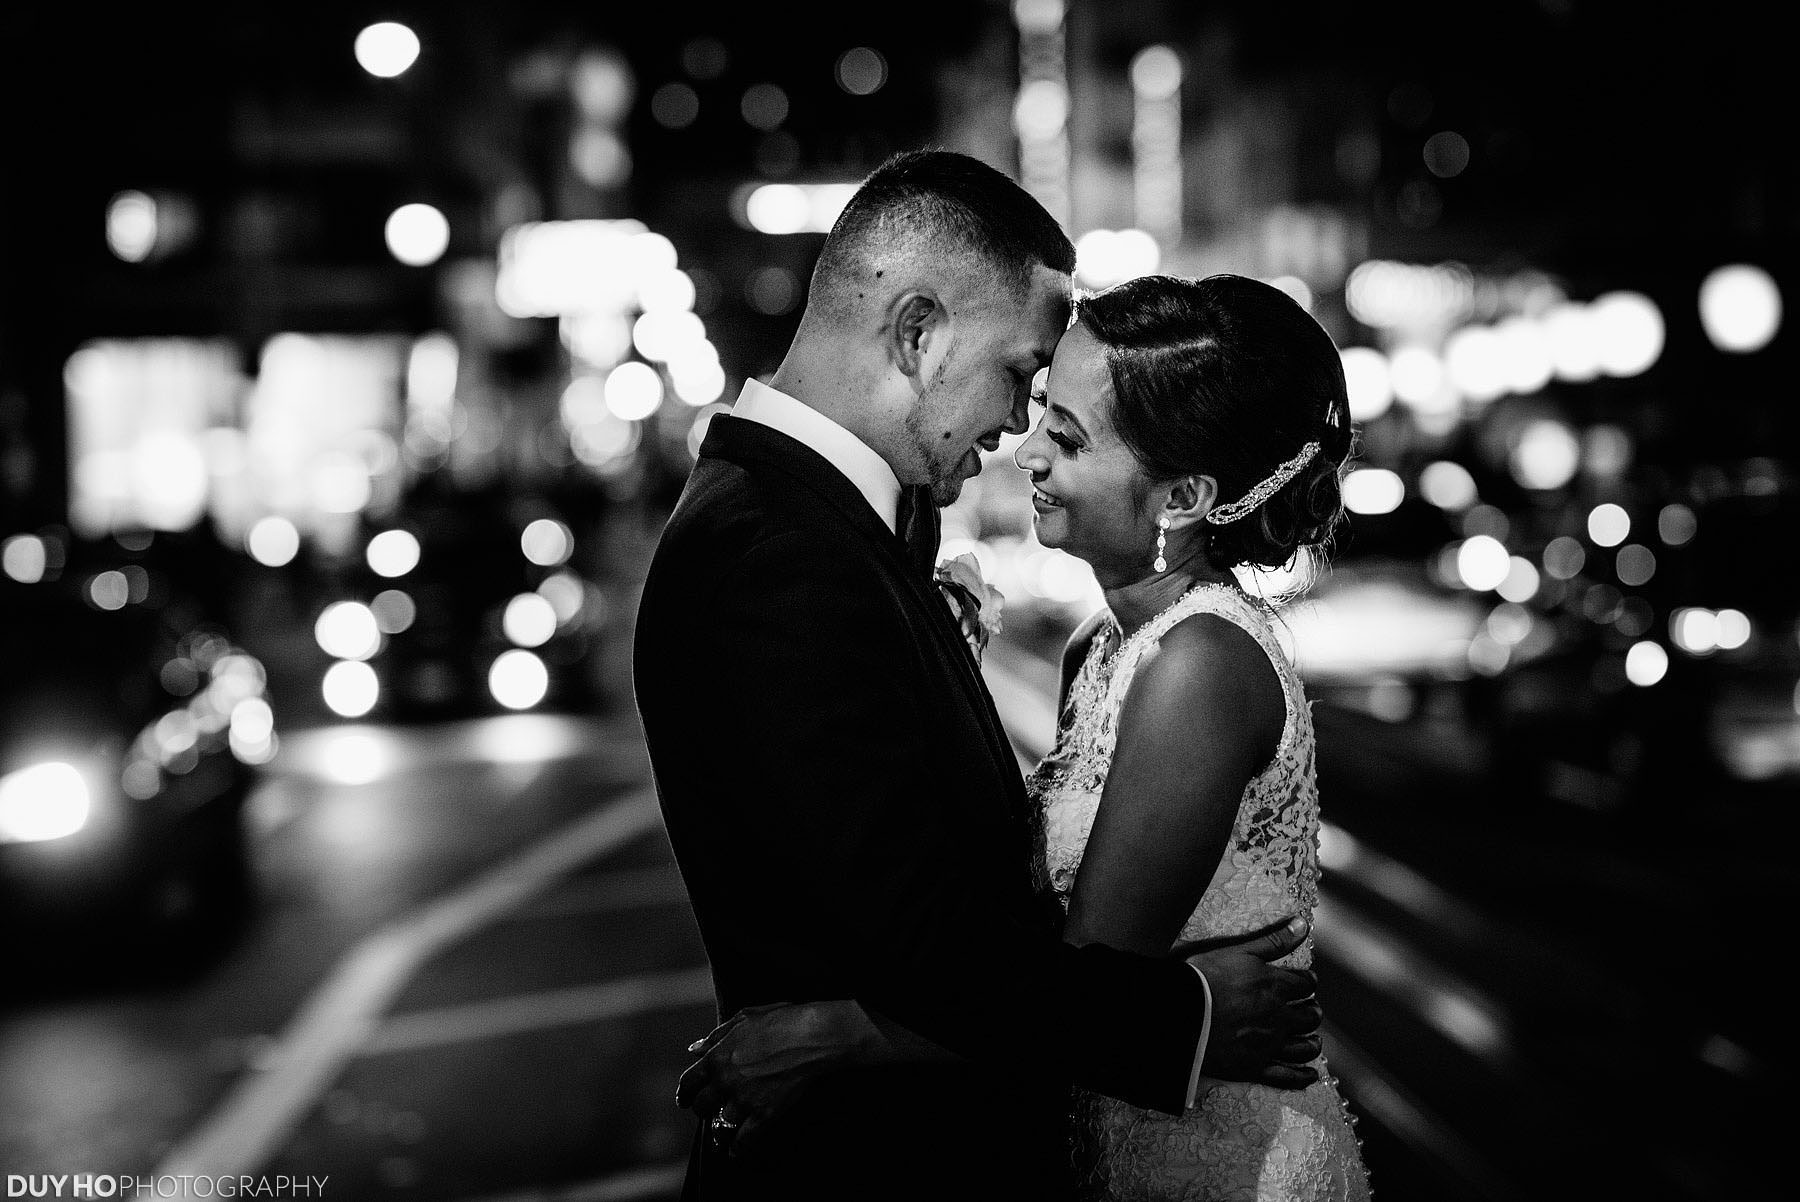 Night time wedding portrait in San Francisco